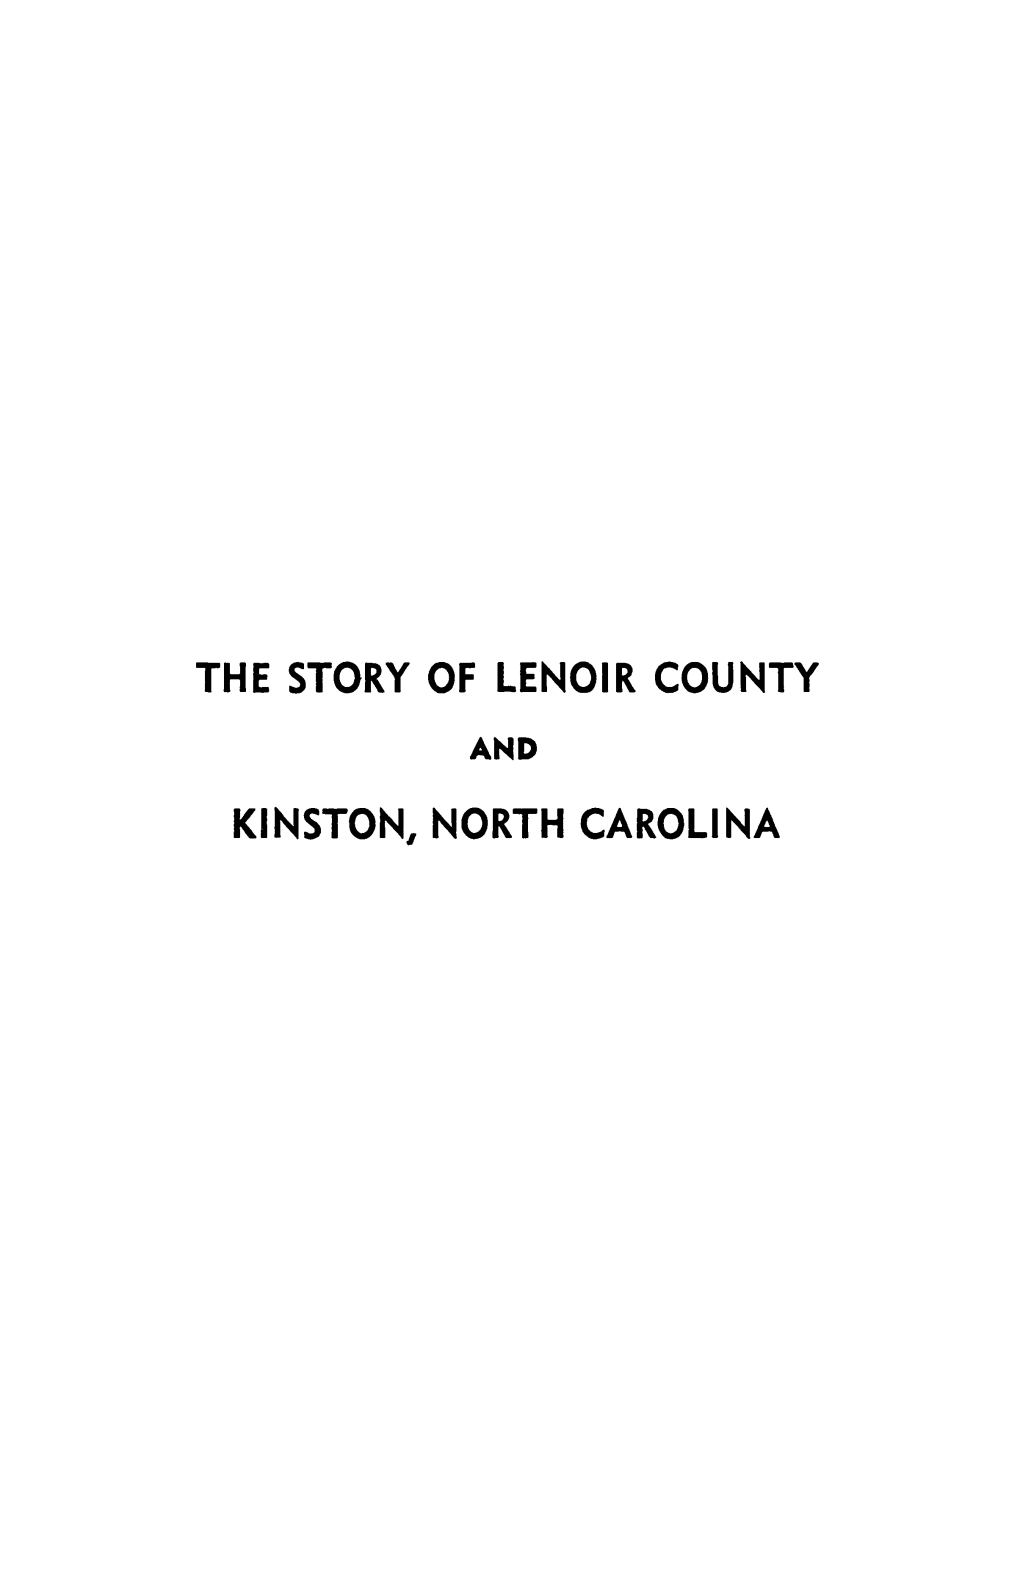 THE STORY of LENOIR COUNTY Kl NSTON, NORTH CAROLI NA